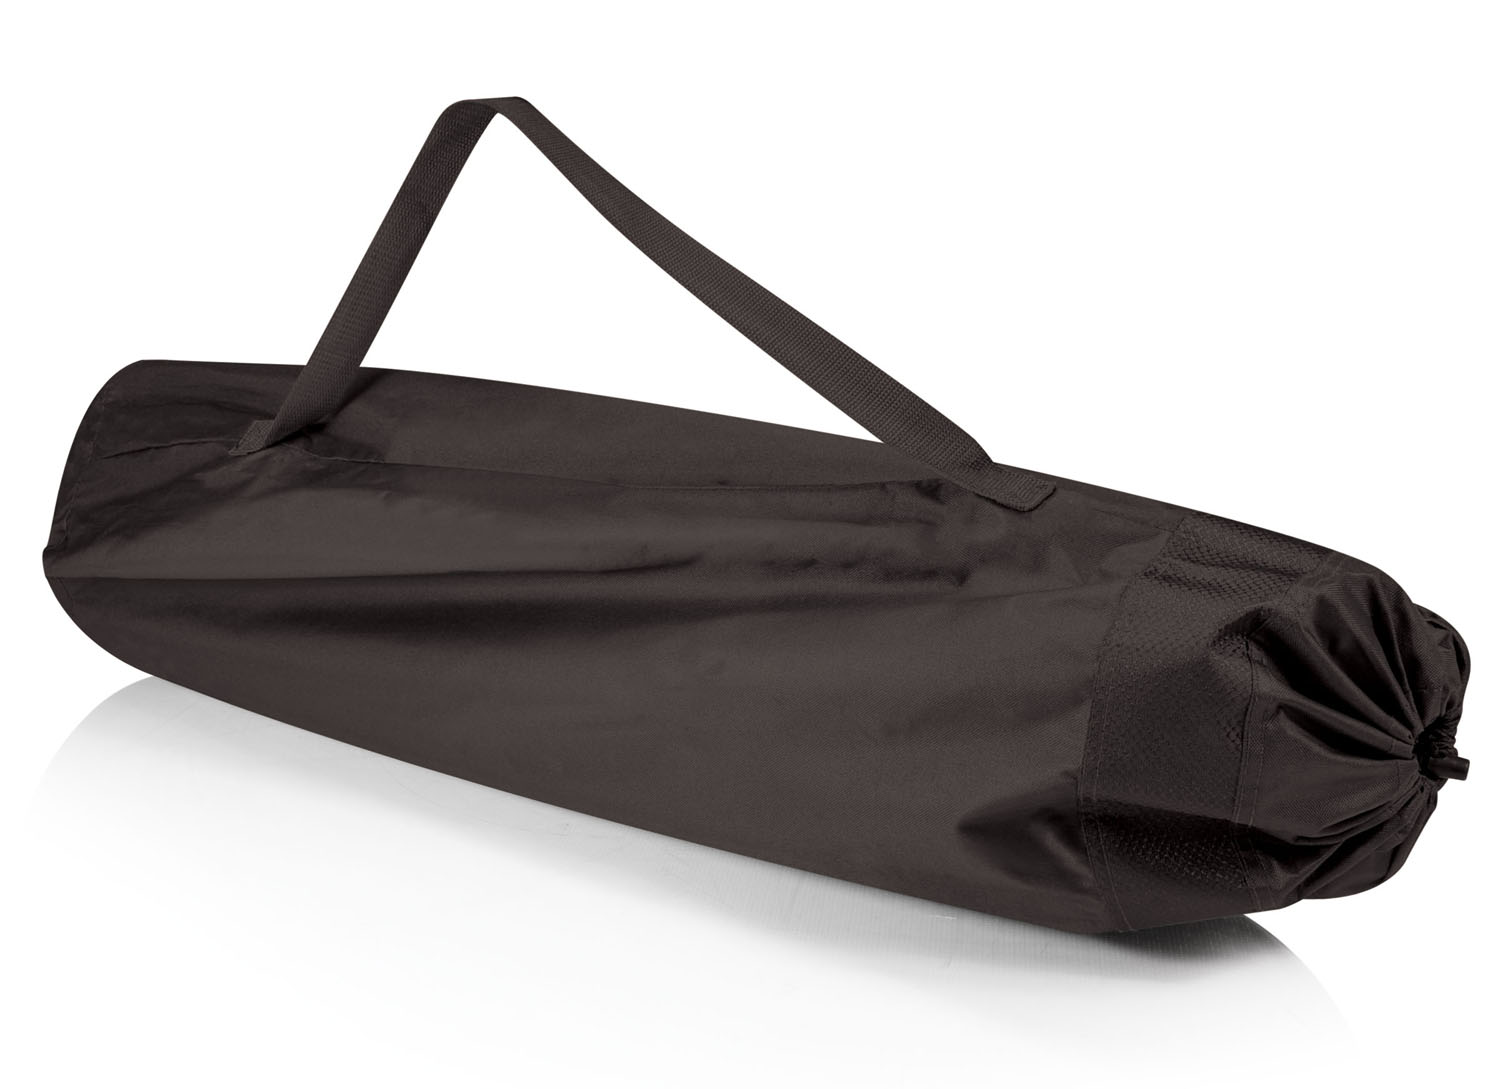 Picnic Time PT-XL Portable Folding Camp Chair - Black - image 2 of 5